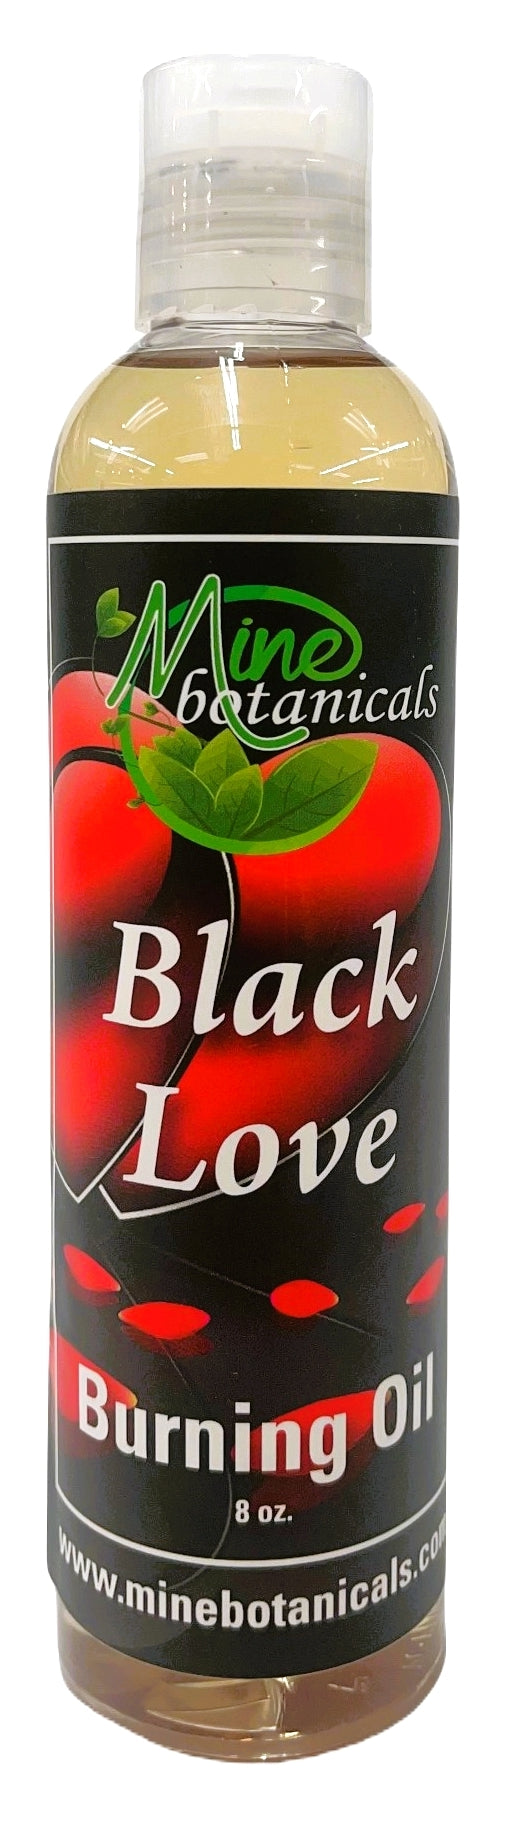 Black Love Burning oil